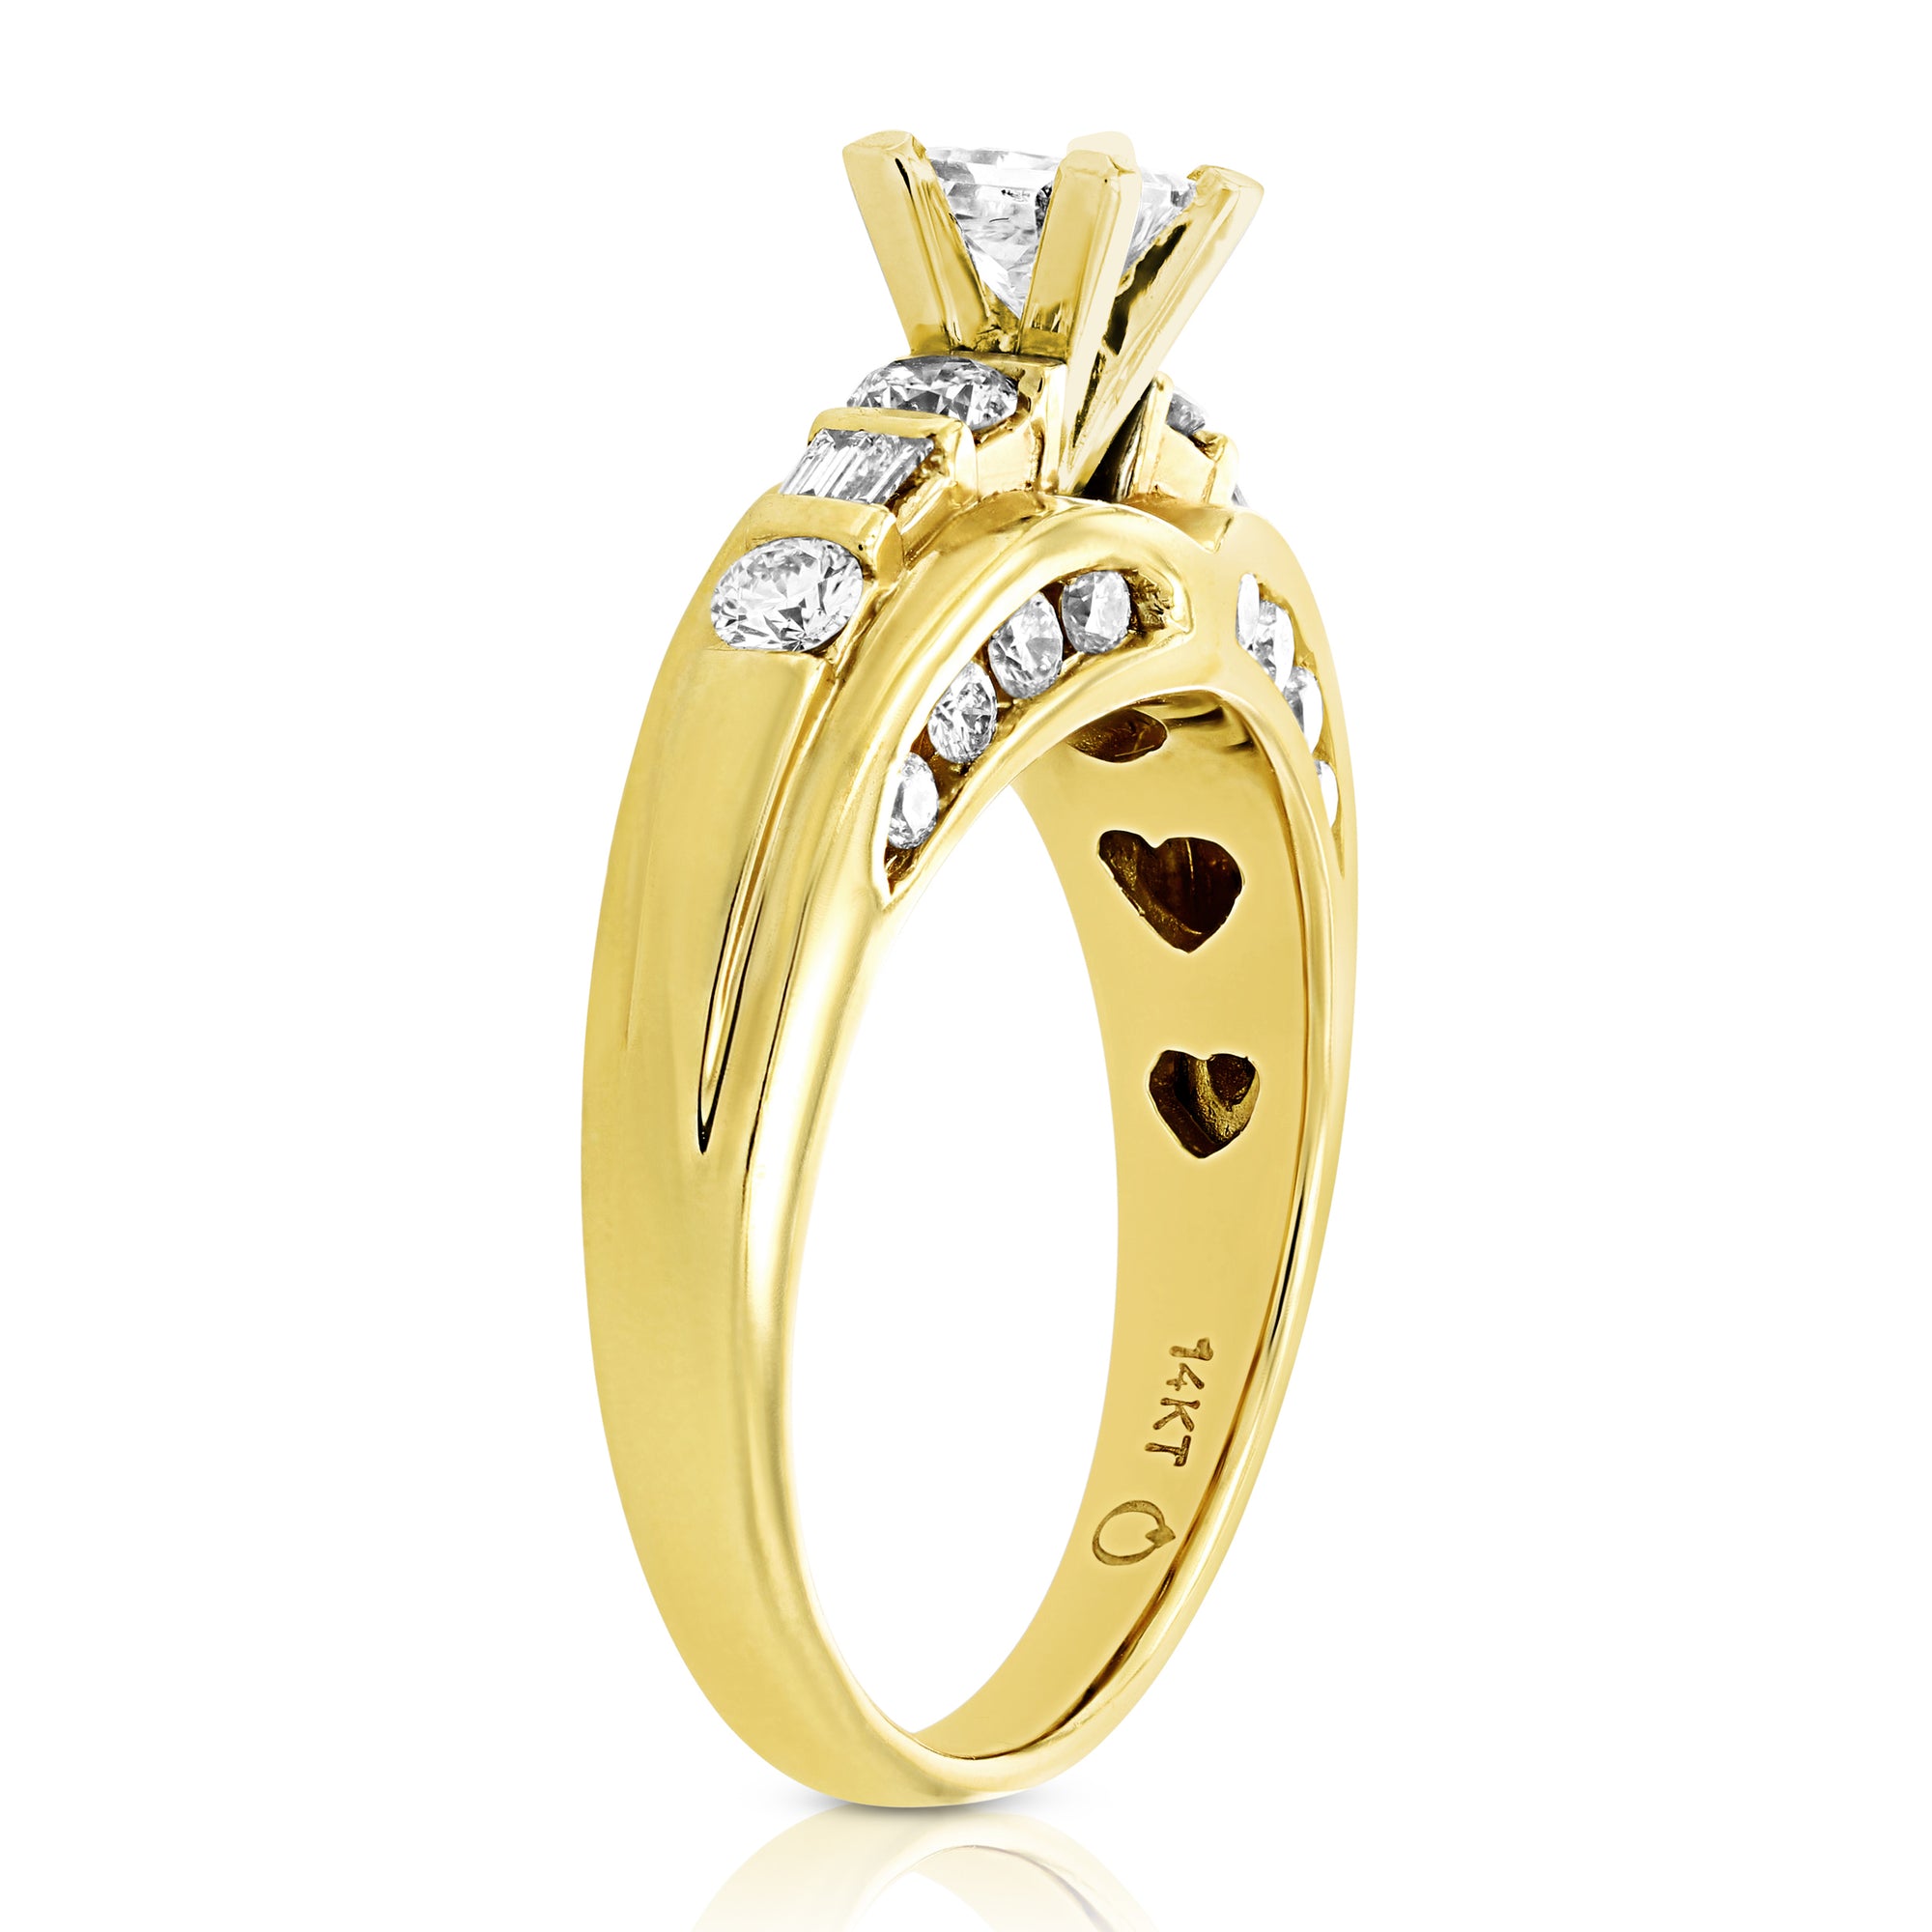 1 cttw Diamond Engagement Ring 14K Yellow Gold Princess Cut Bridal Size 7